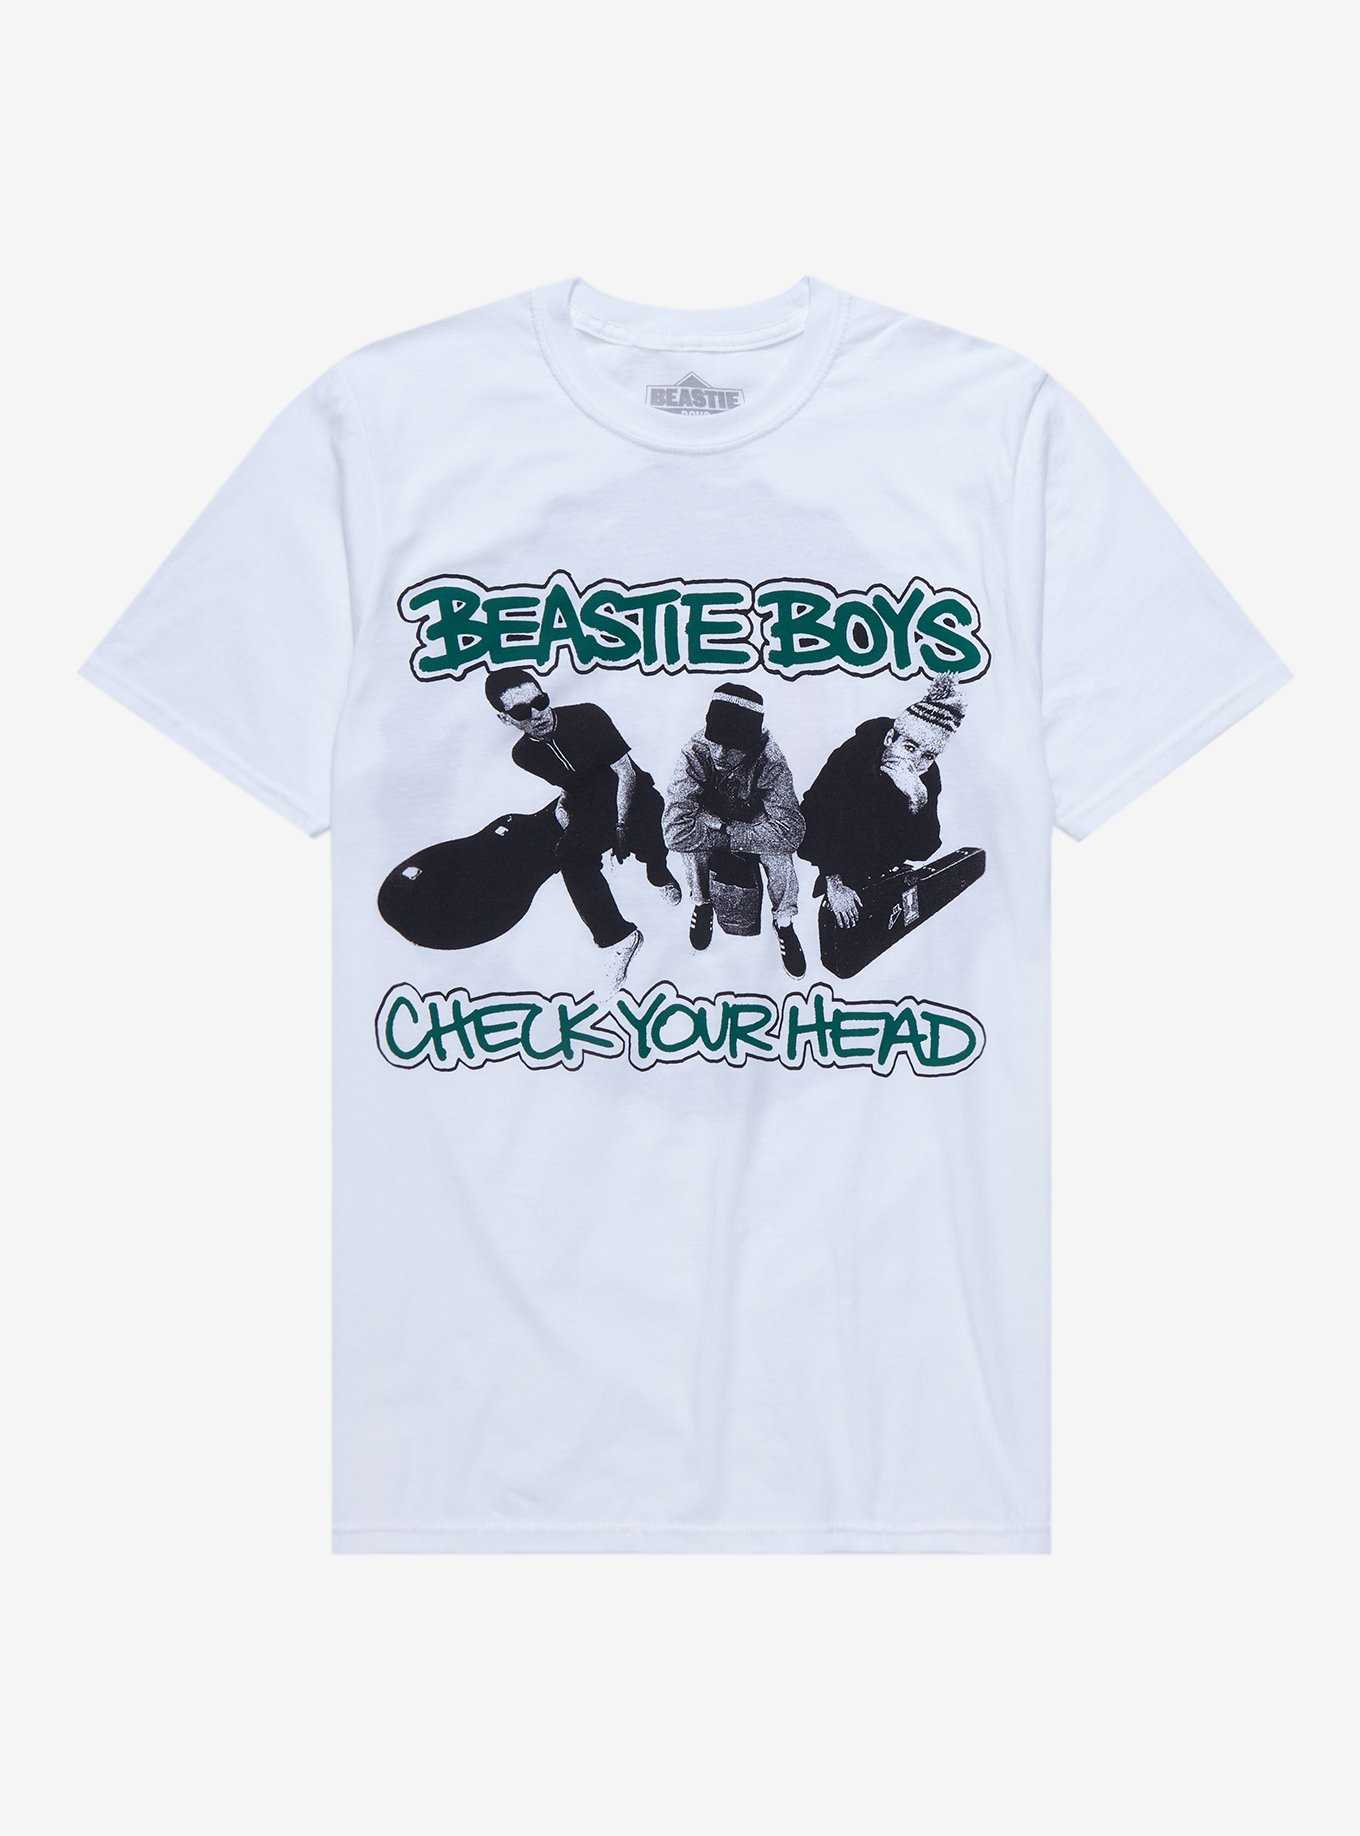 Beastie Boys Check Your Head T-Shirt, , hi-res